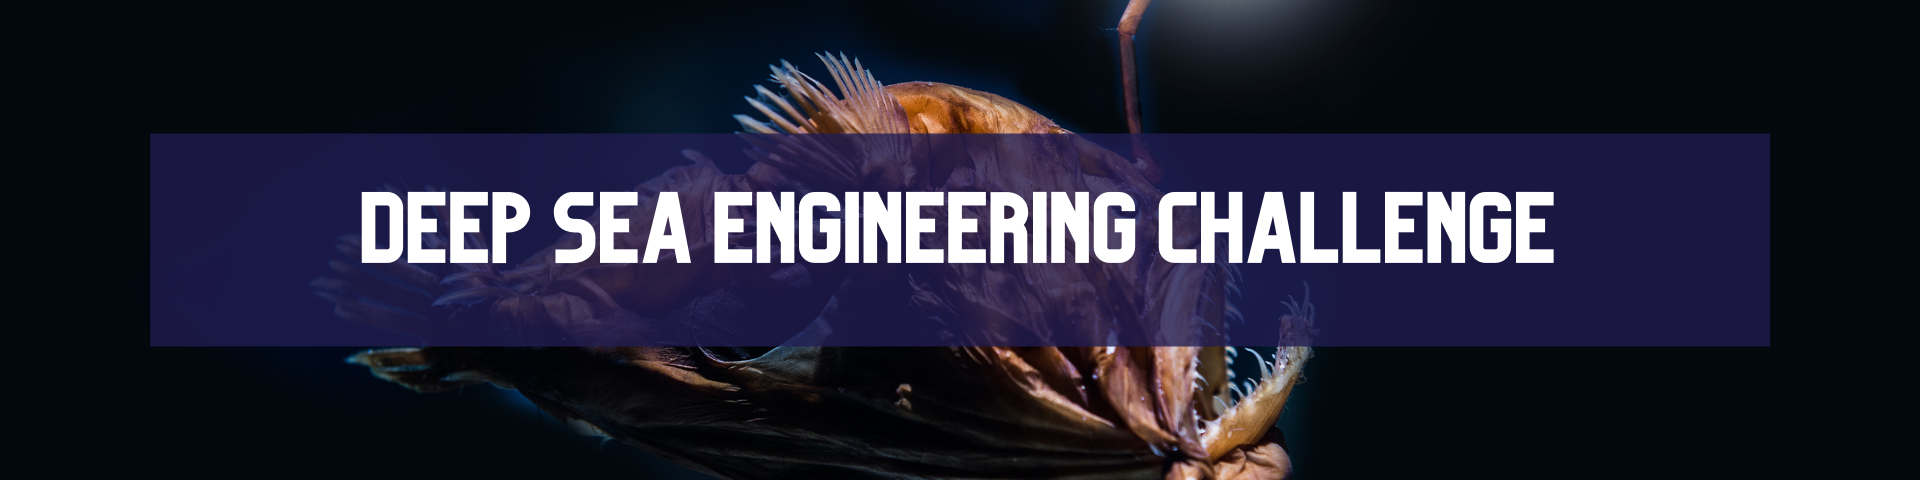 Deep-Sea Engineering program - 1